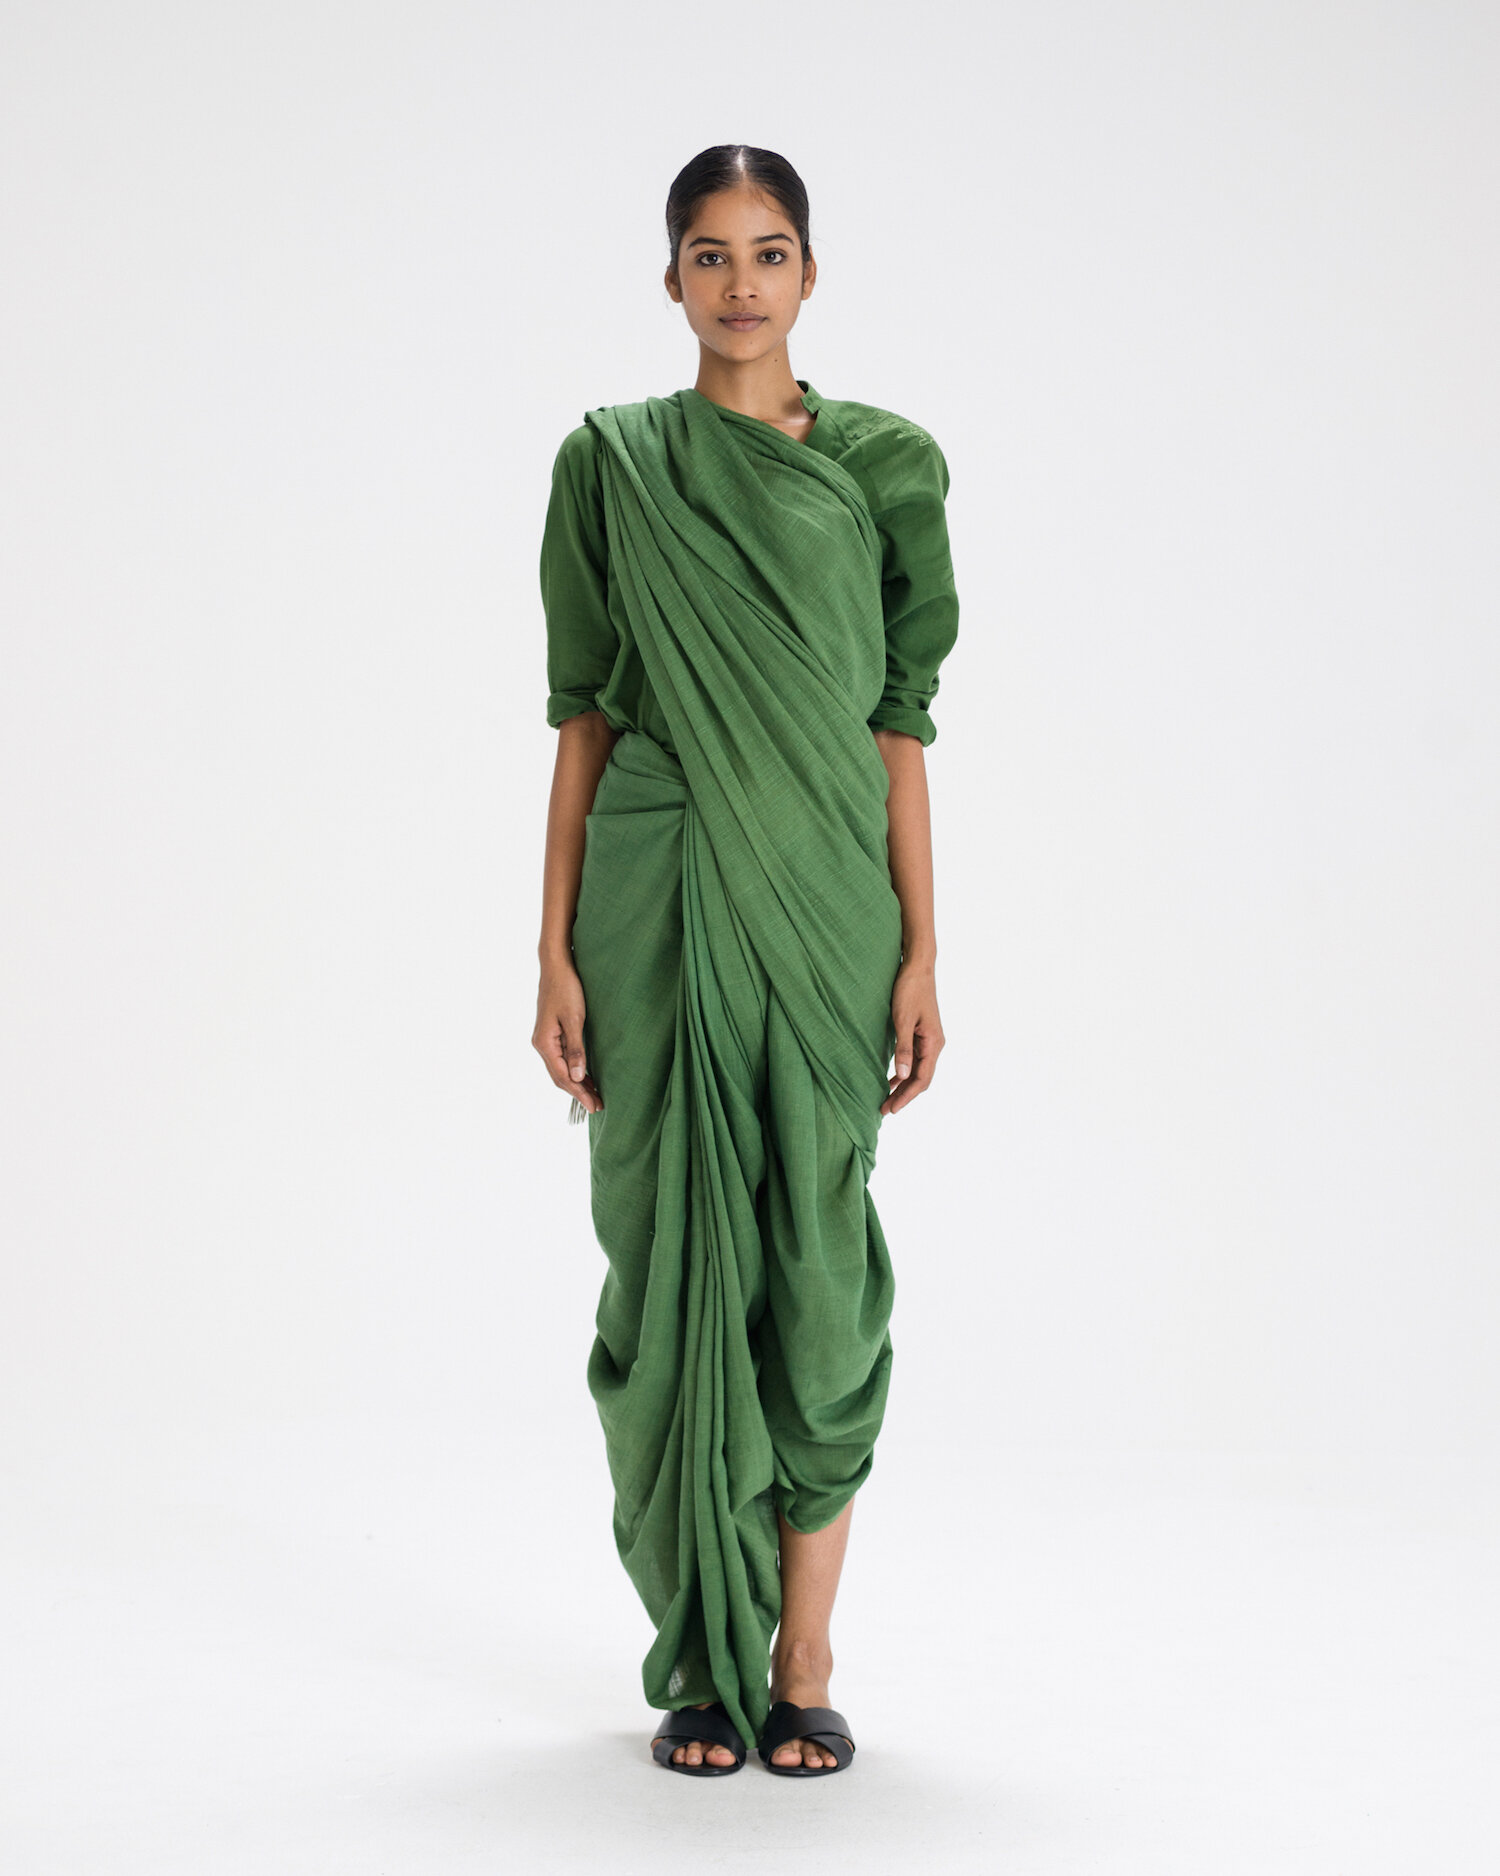 The Sari Series — RASHMI VARMA